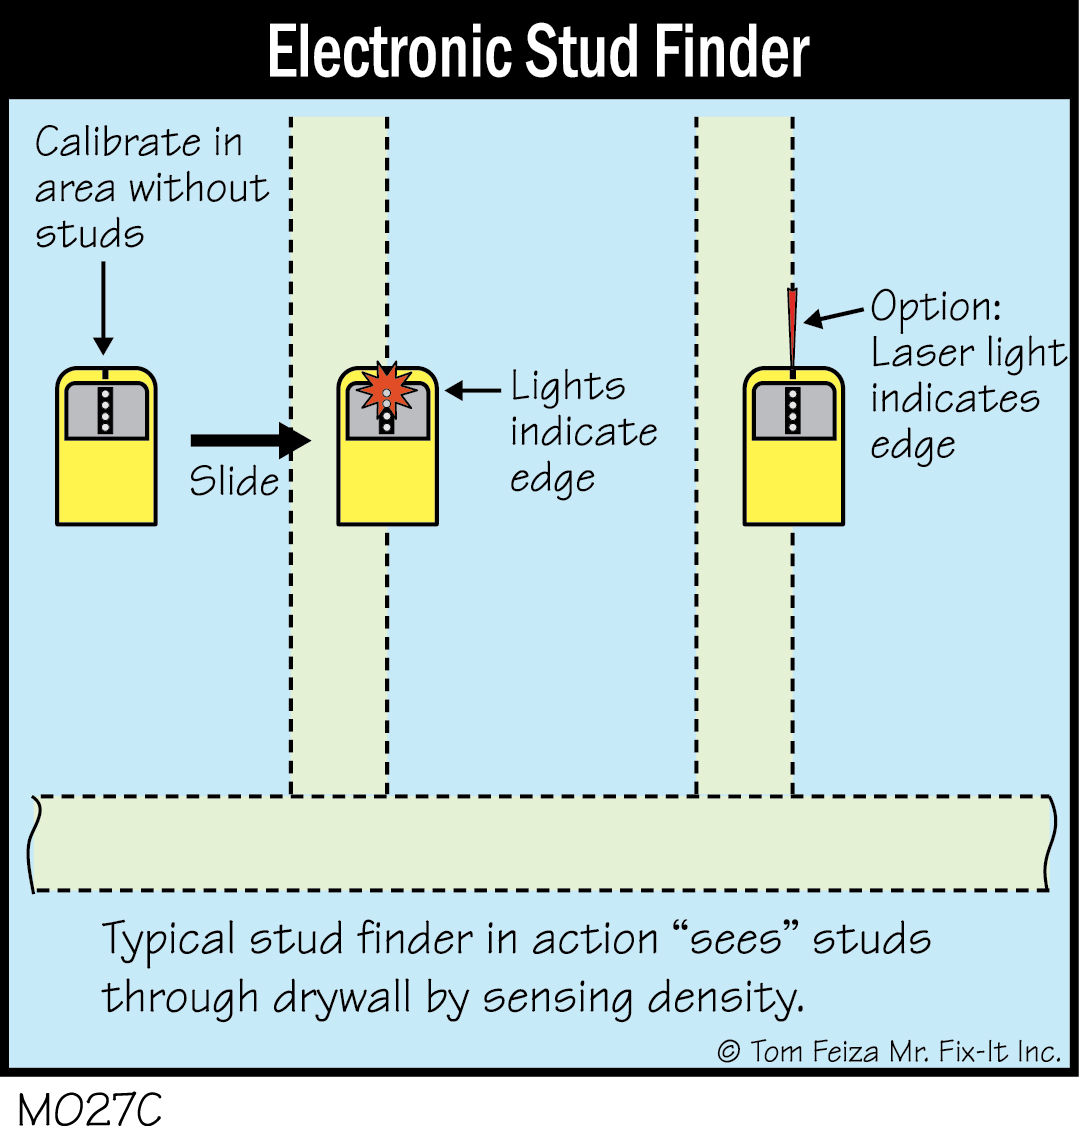 M027C - Electronic Stud Finder